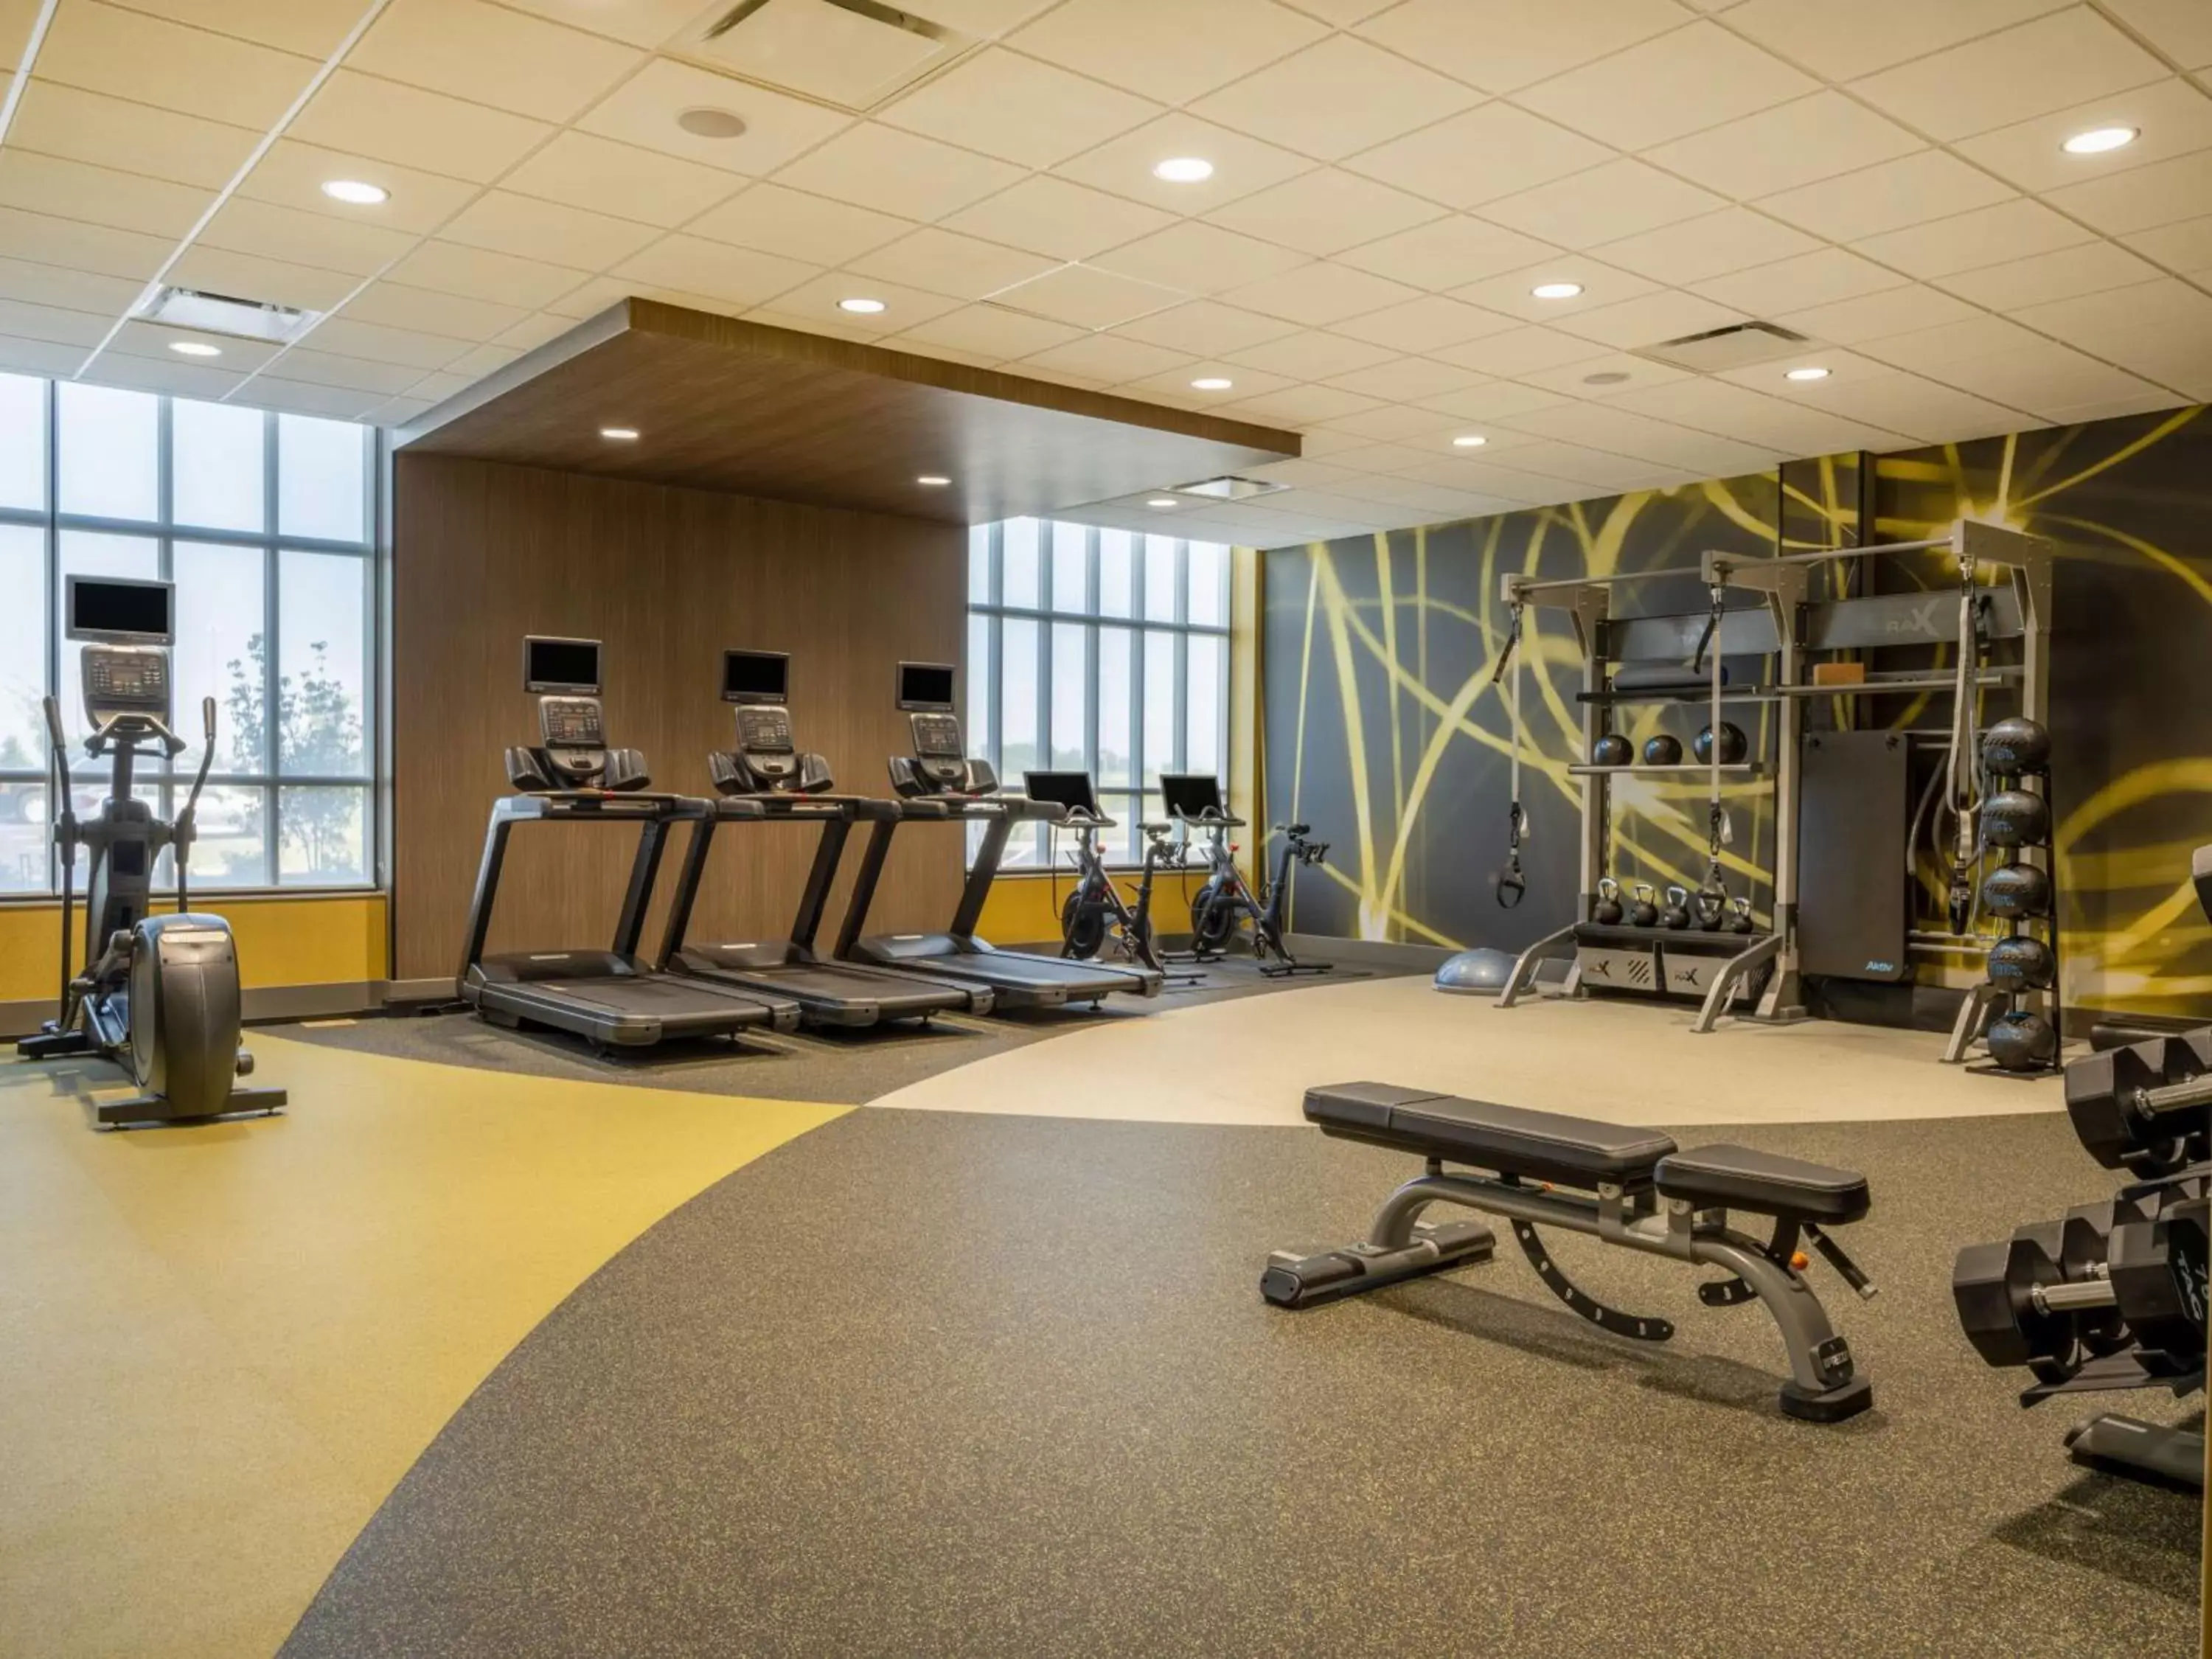 Fitness centre/facilities, Fitness Center/Facilities in Hilton Garden Inn Jeffersonville, In